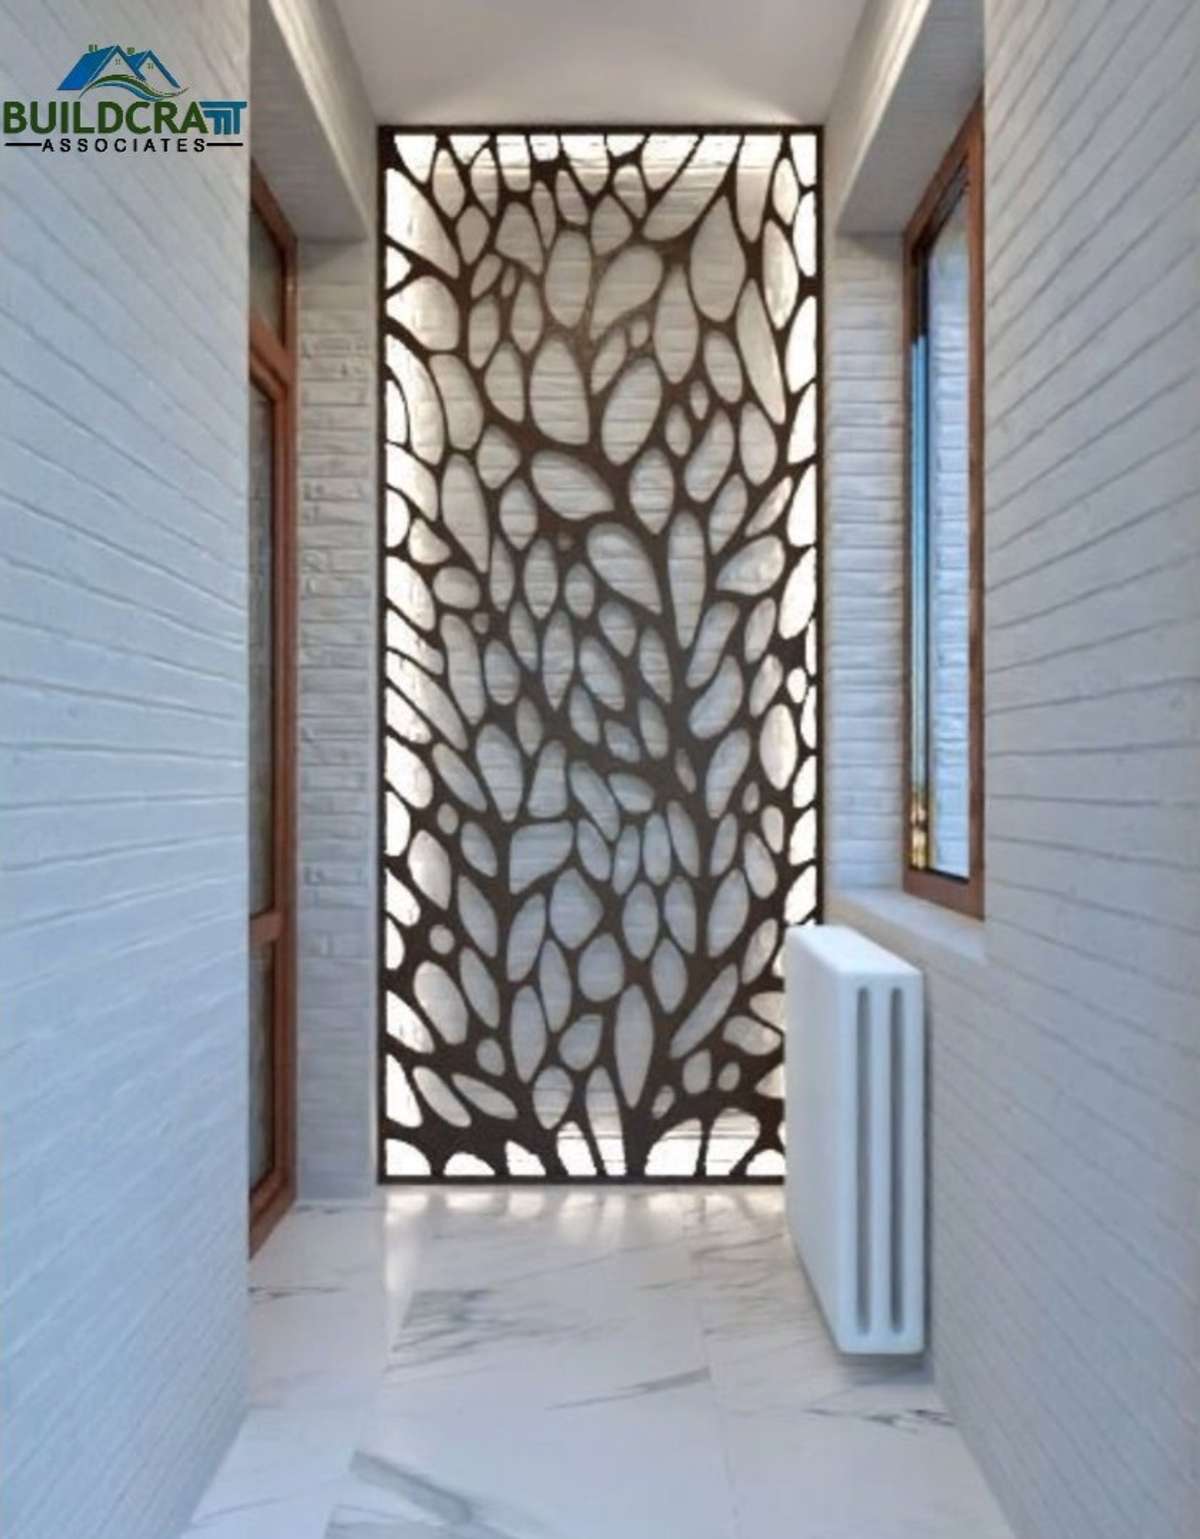 Wall, Lighting Designs by Interior Designer Build Craft Associates, Gautam Buddh Nagar | Kolo